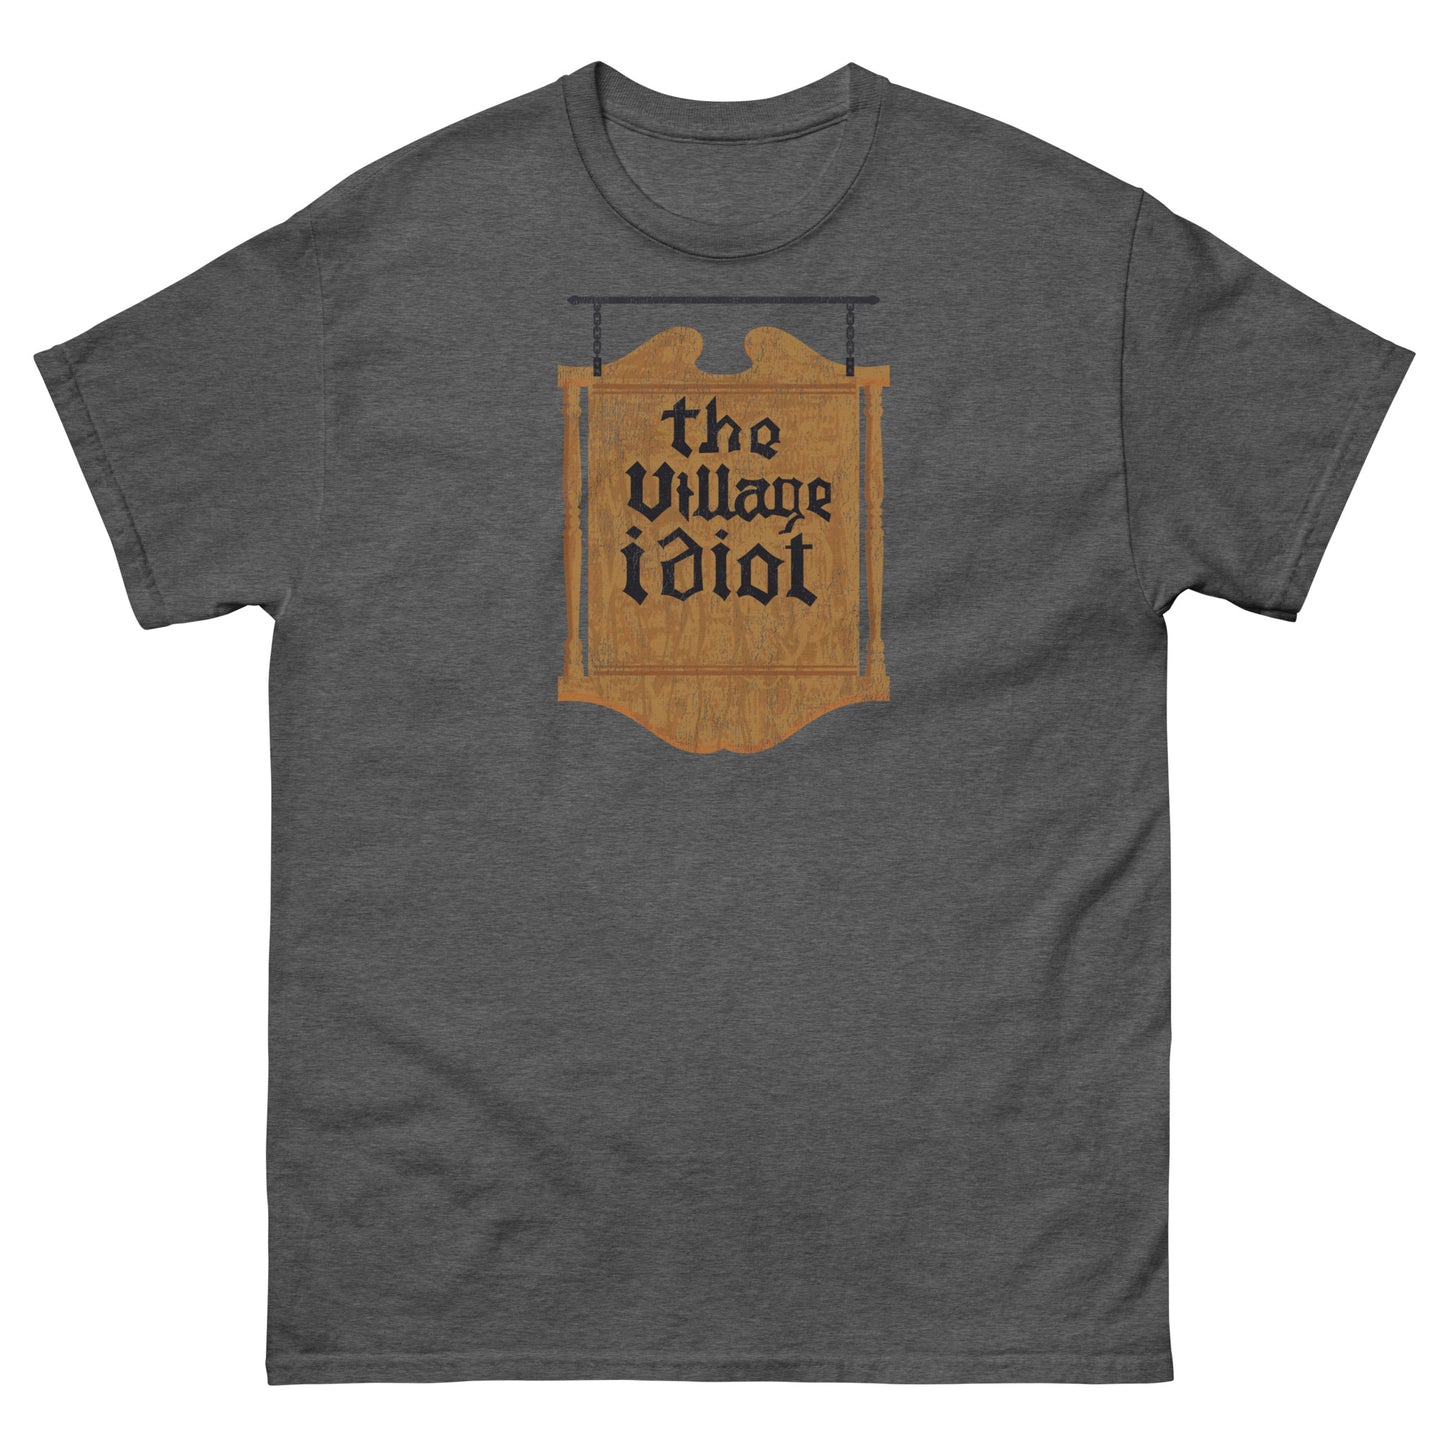 The Village Idiot Bar - Standard T-Shirt